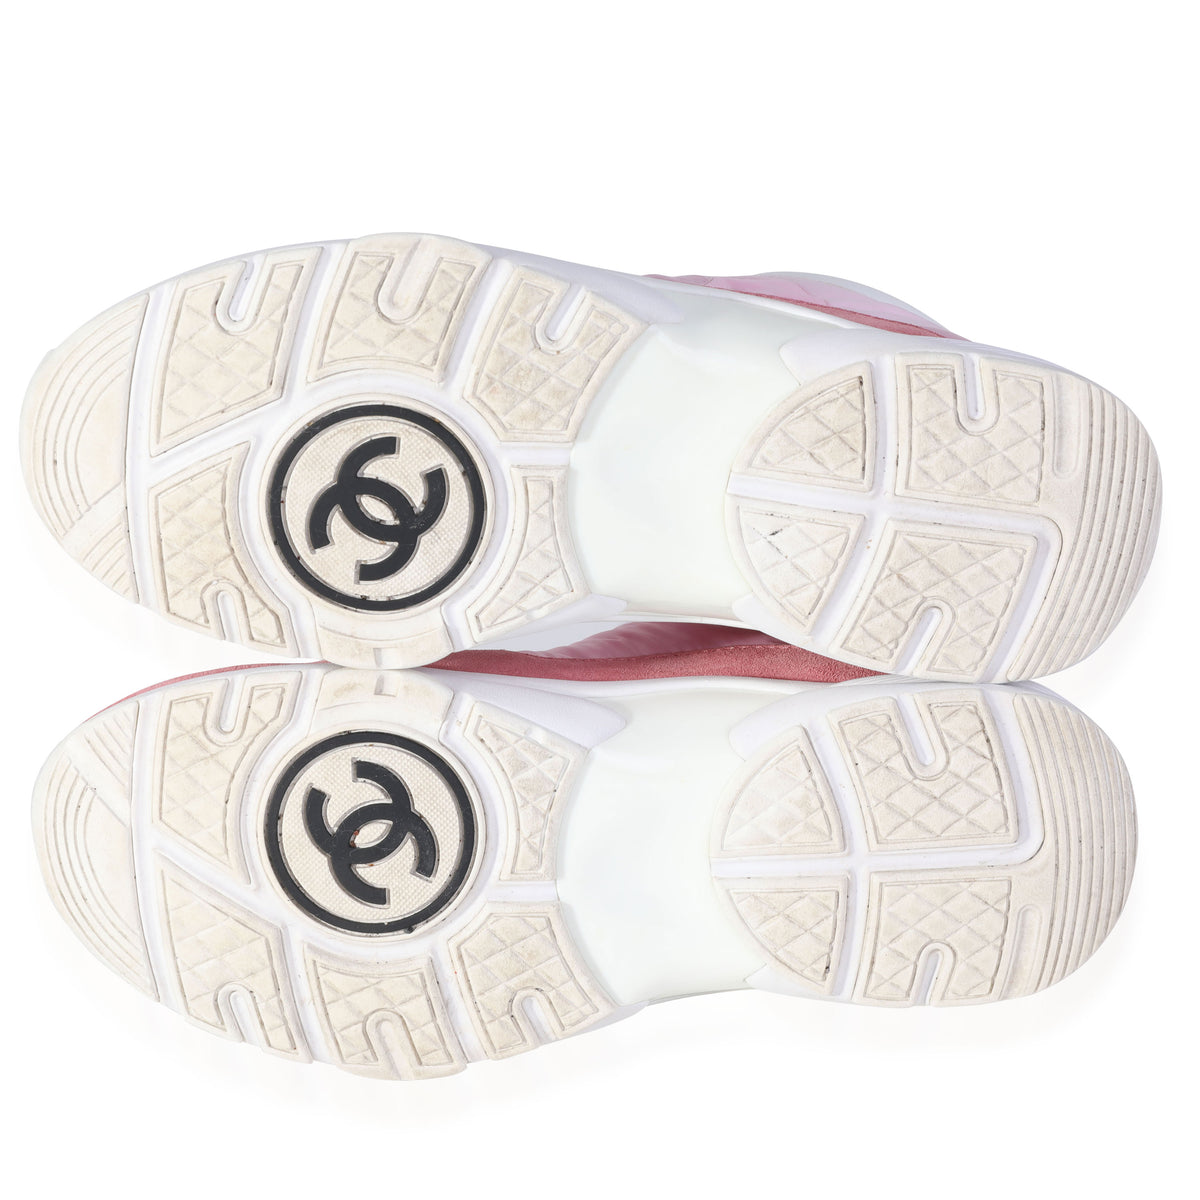 Chanel Wmns Suede Calfskin Sneaker 'Pale Pink' (7.5 US)